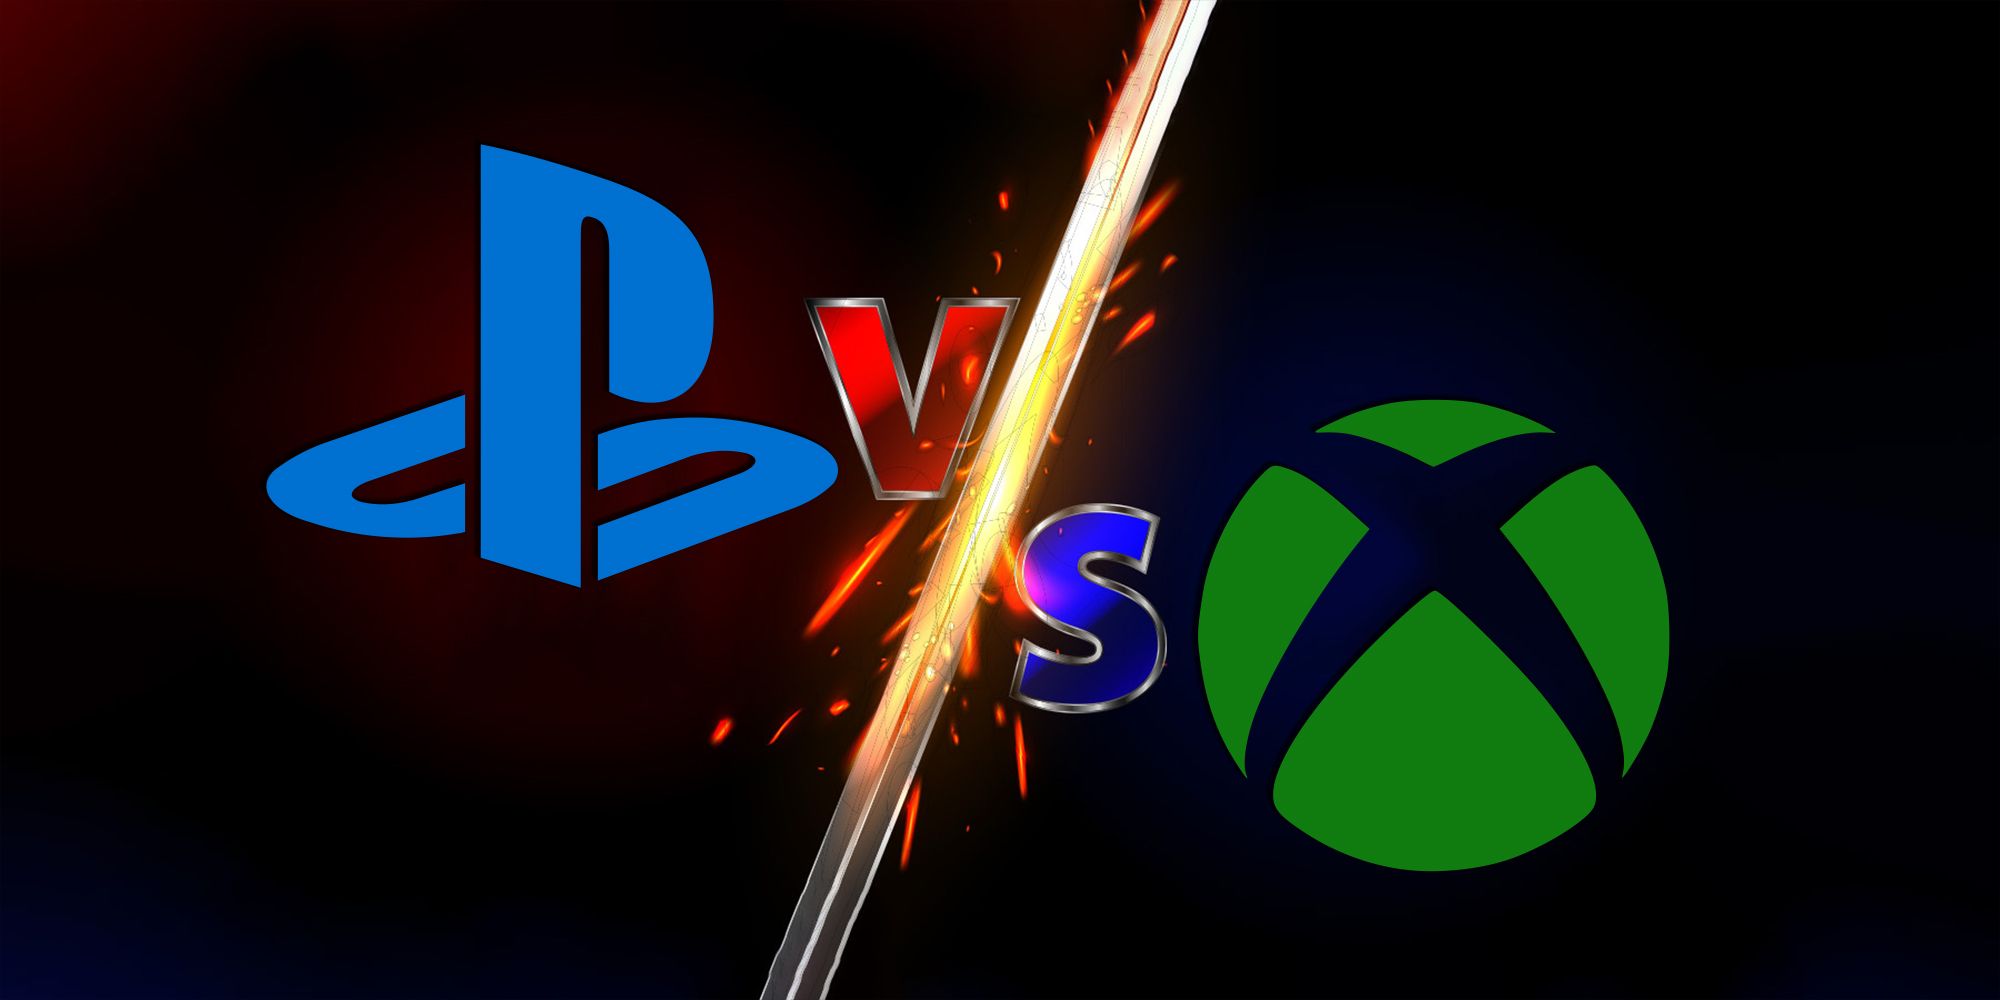 PlayStation vs Xbox logos versus screen